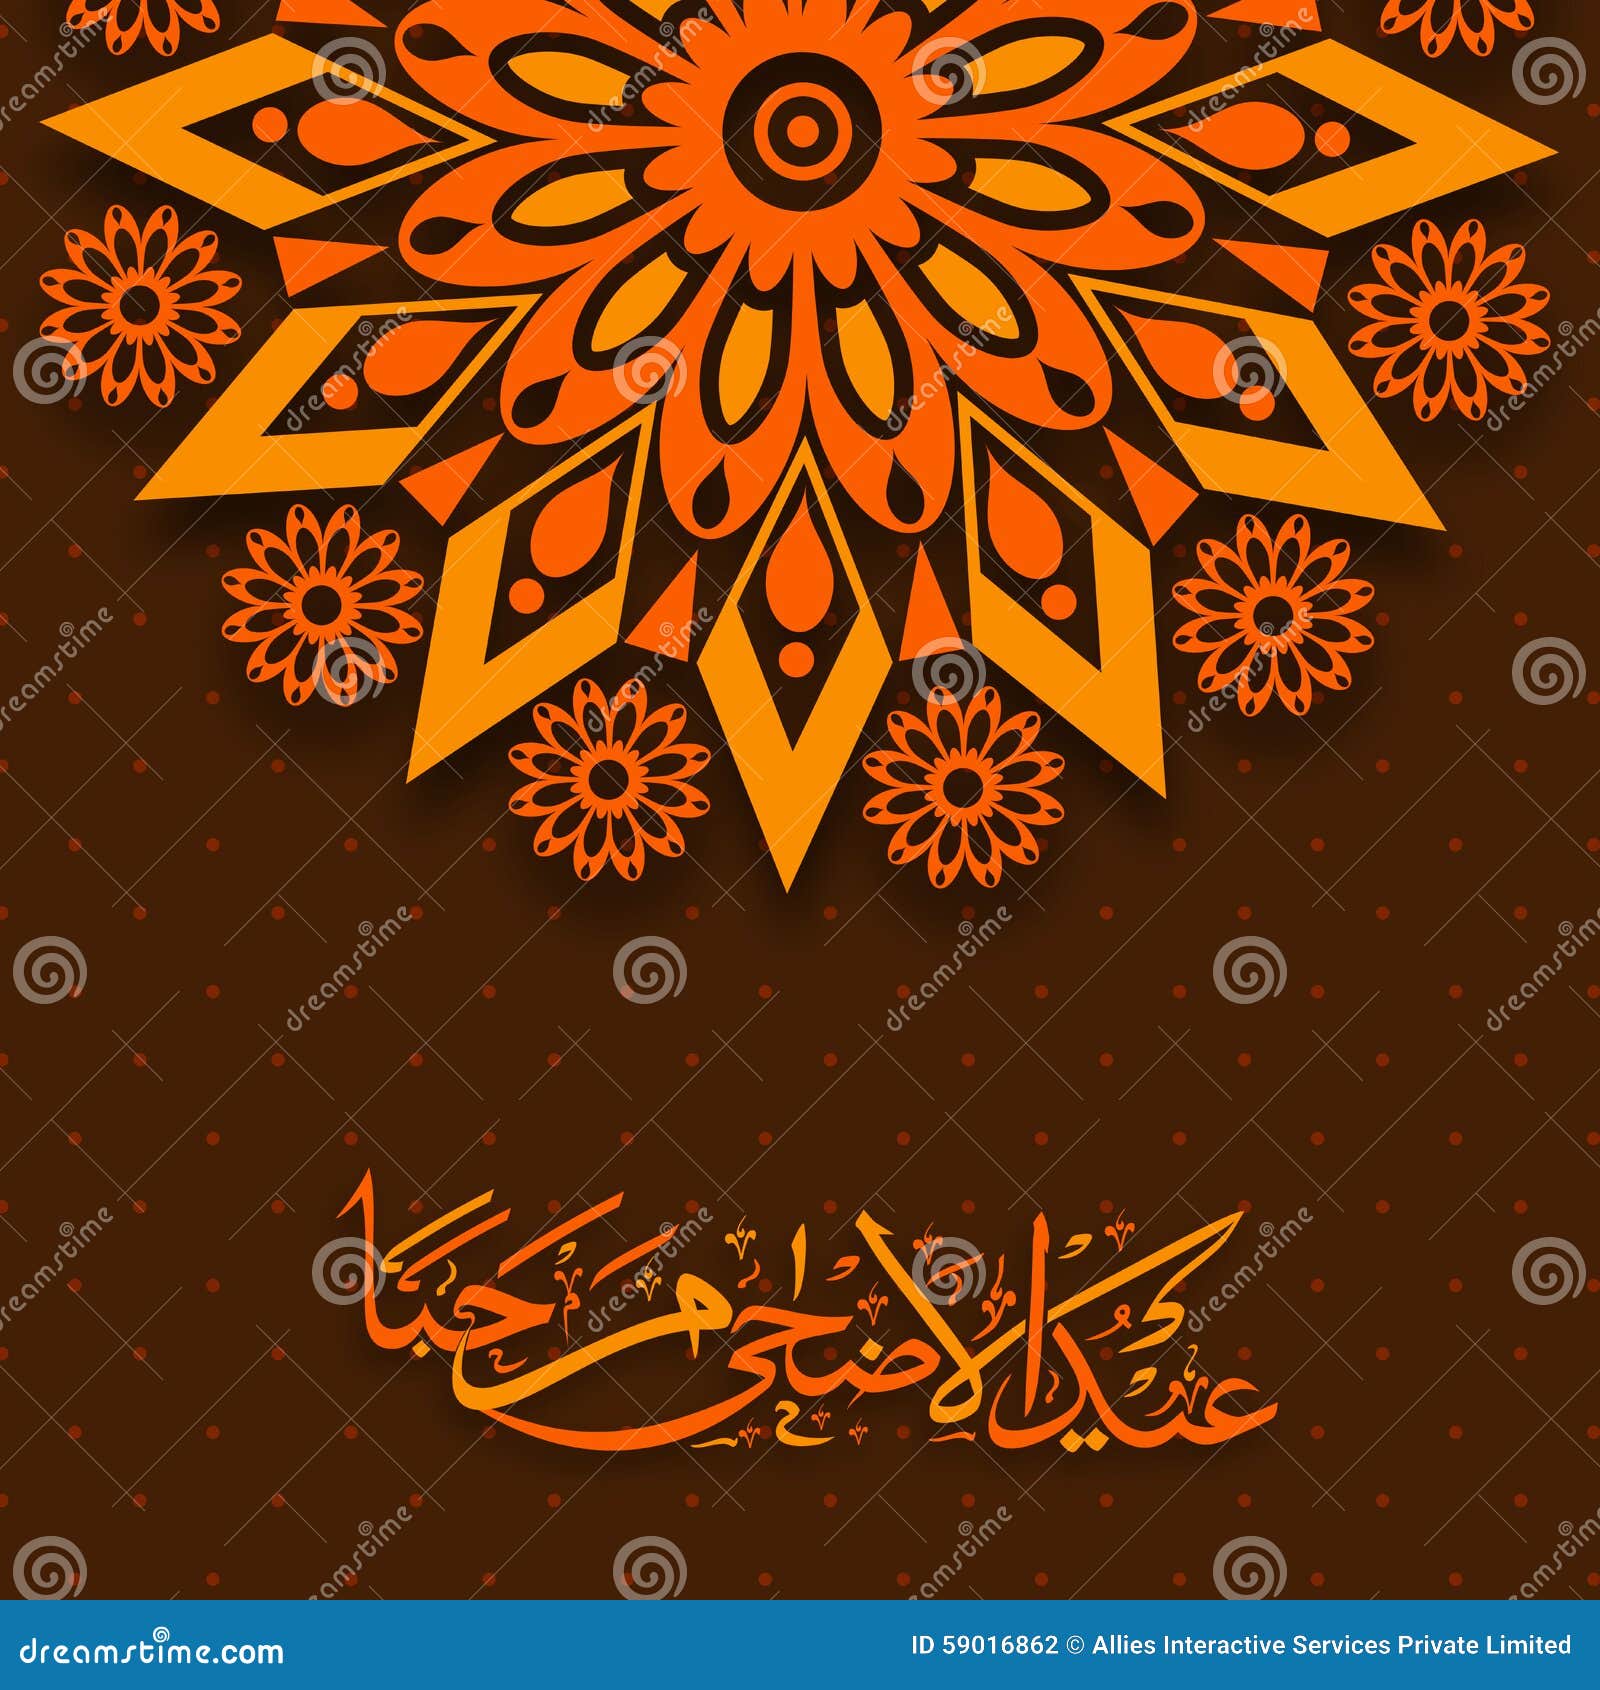 Greeting Card For Eid-Al-Adha Celebration. Stock 